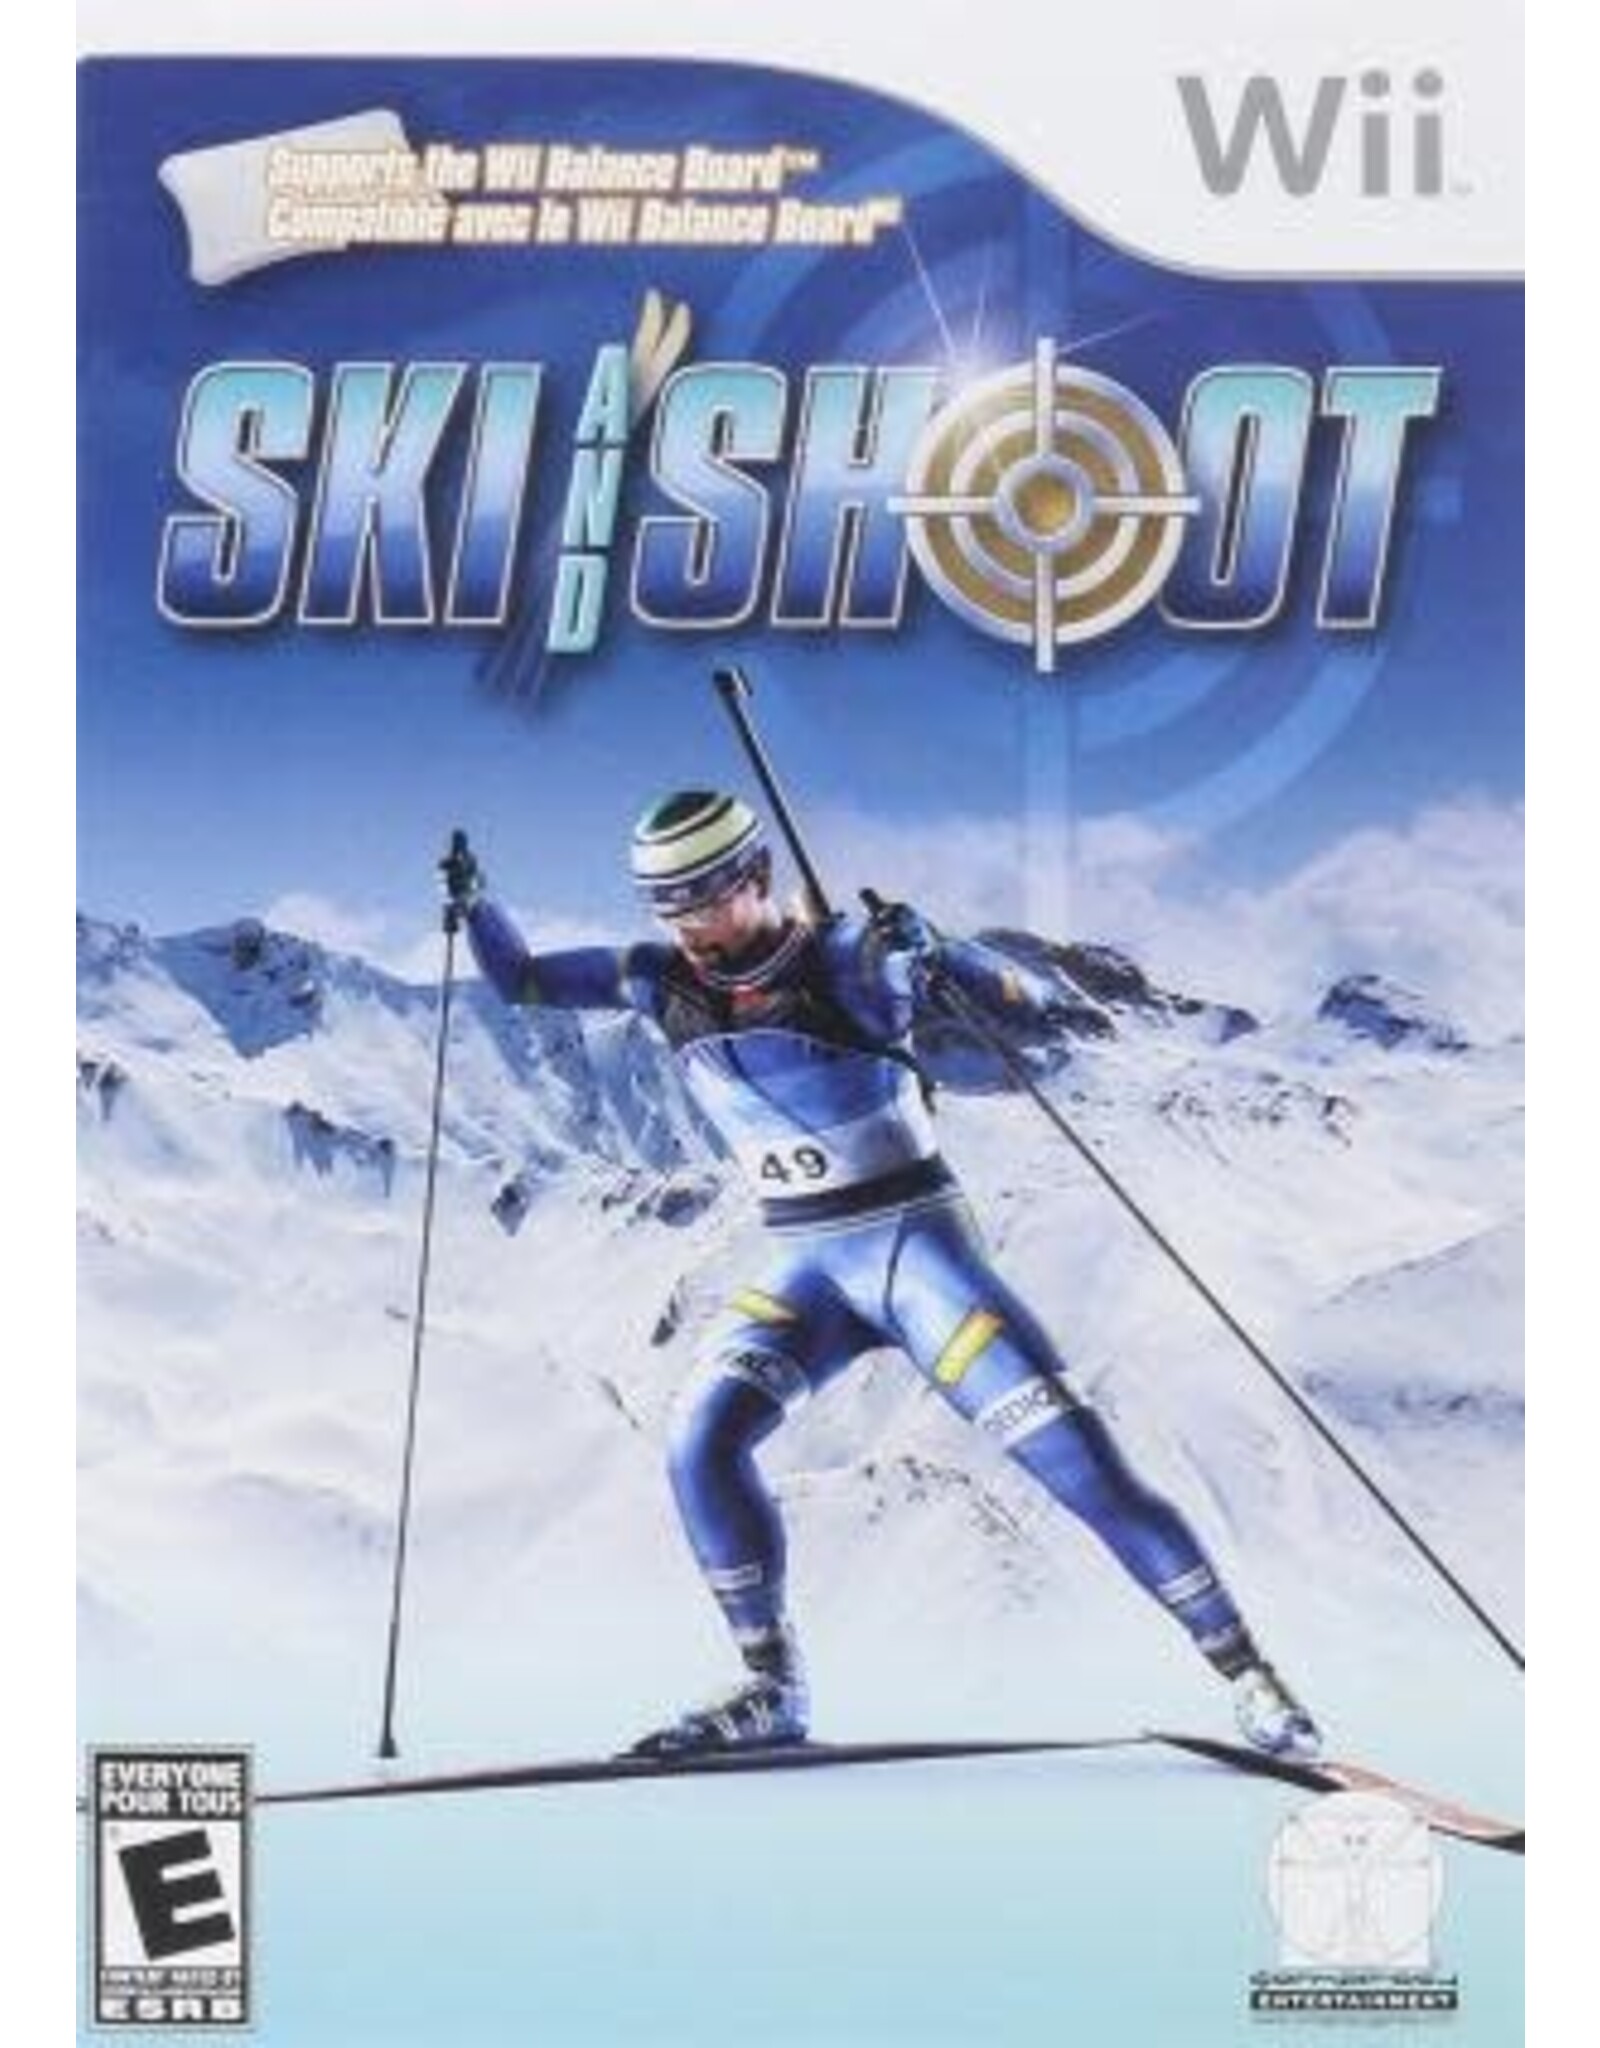 Wii Ski and Shoot (CiB, Damaged Sleeve)